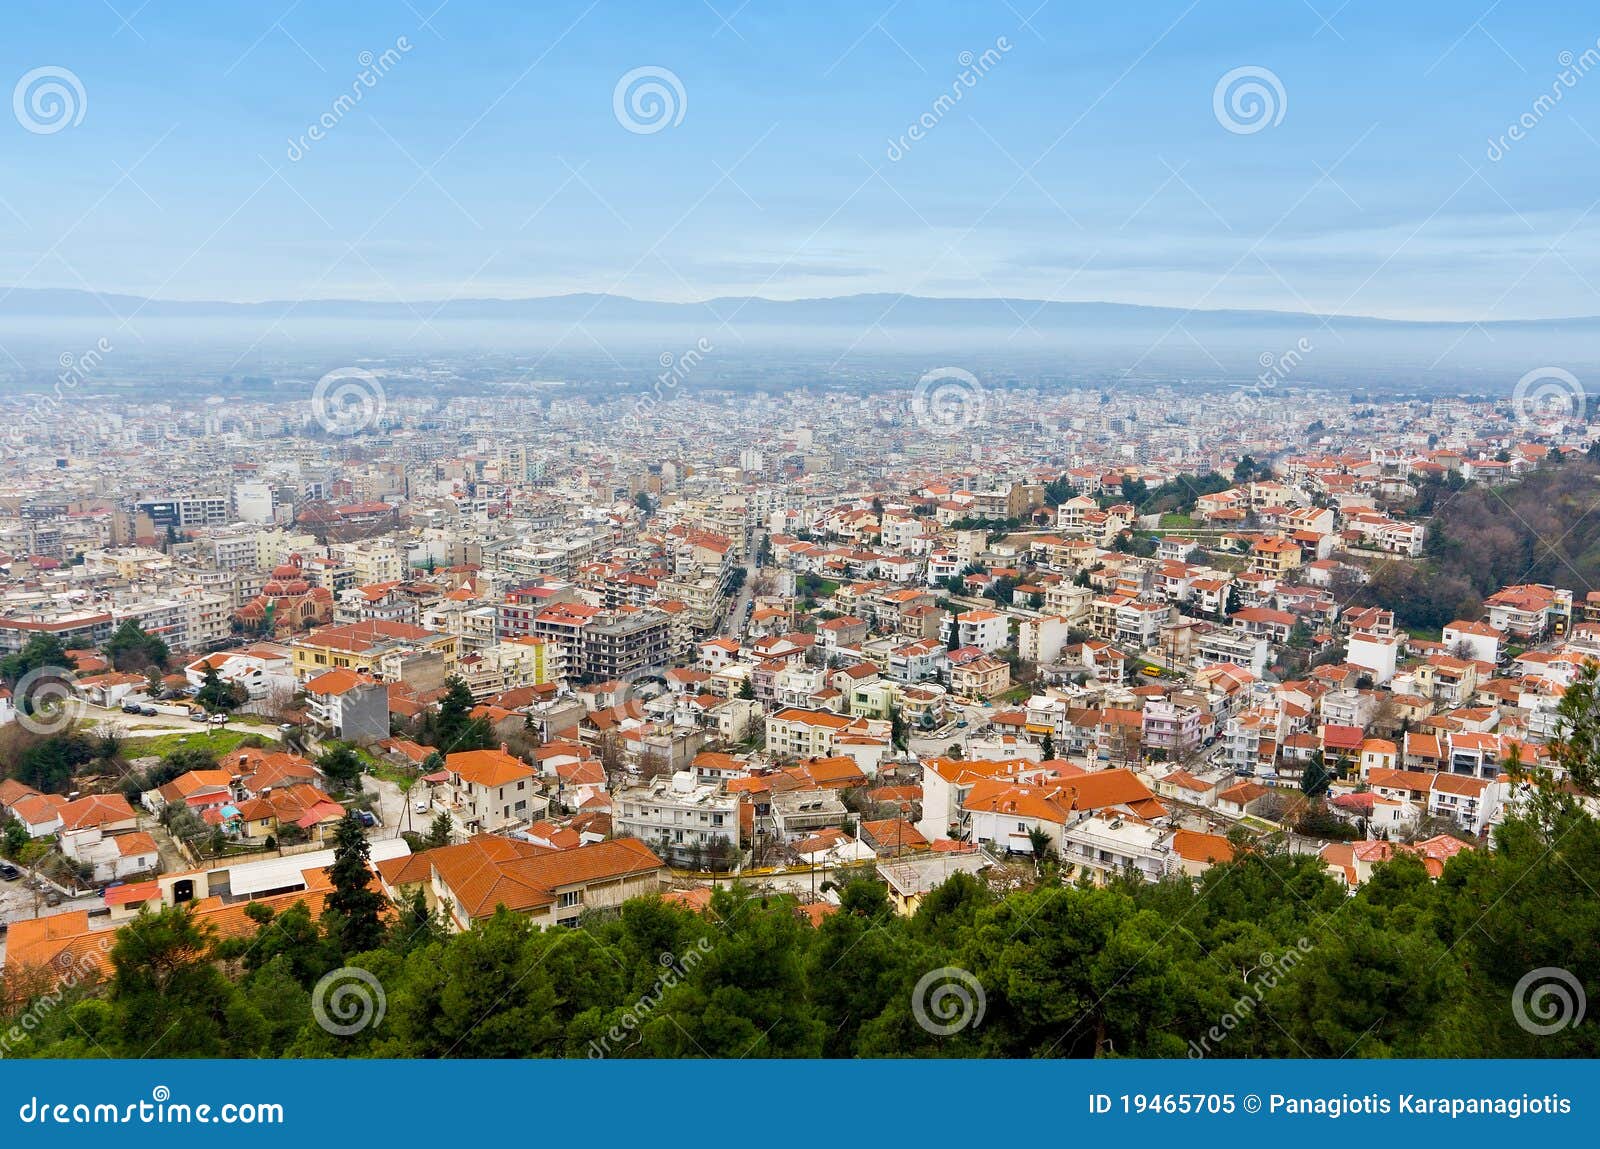 city of serres city at north greece